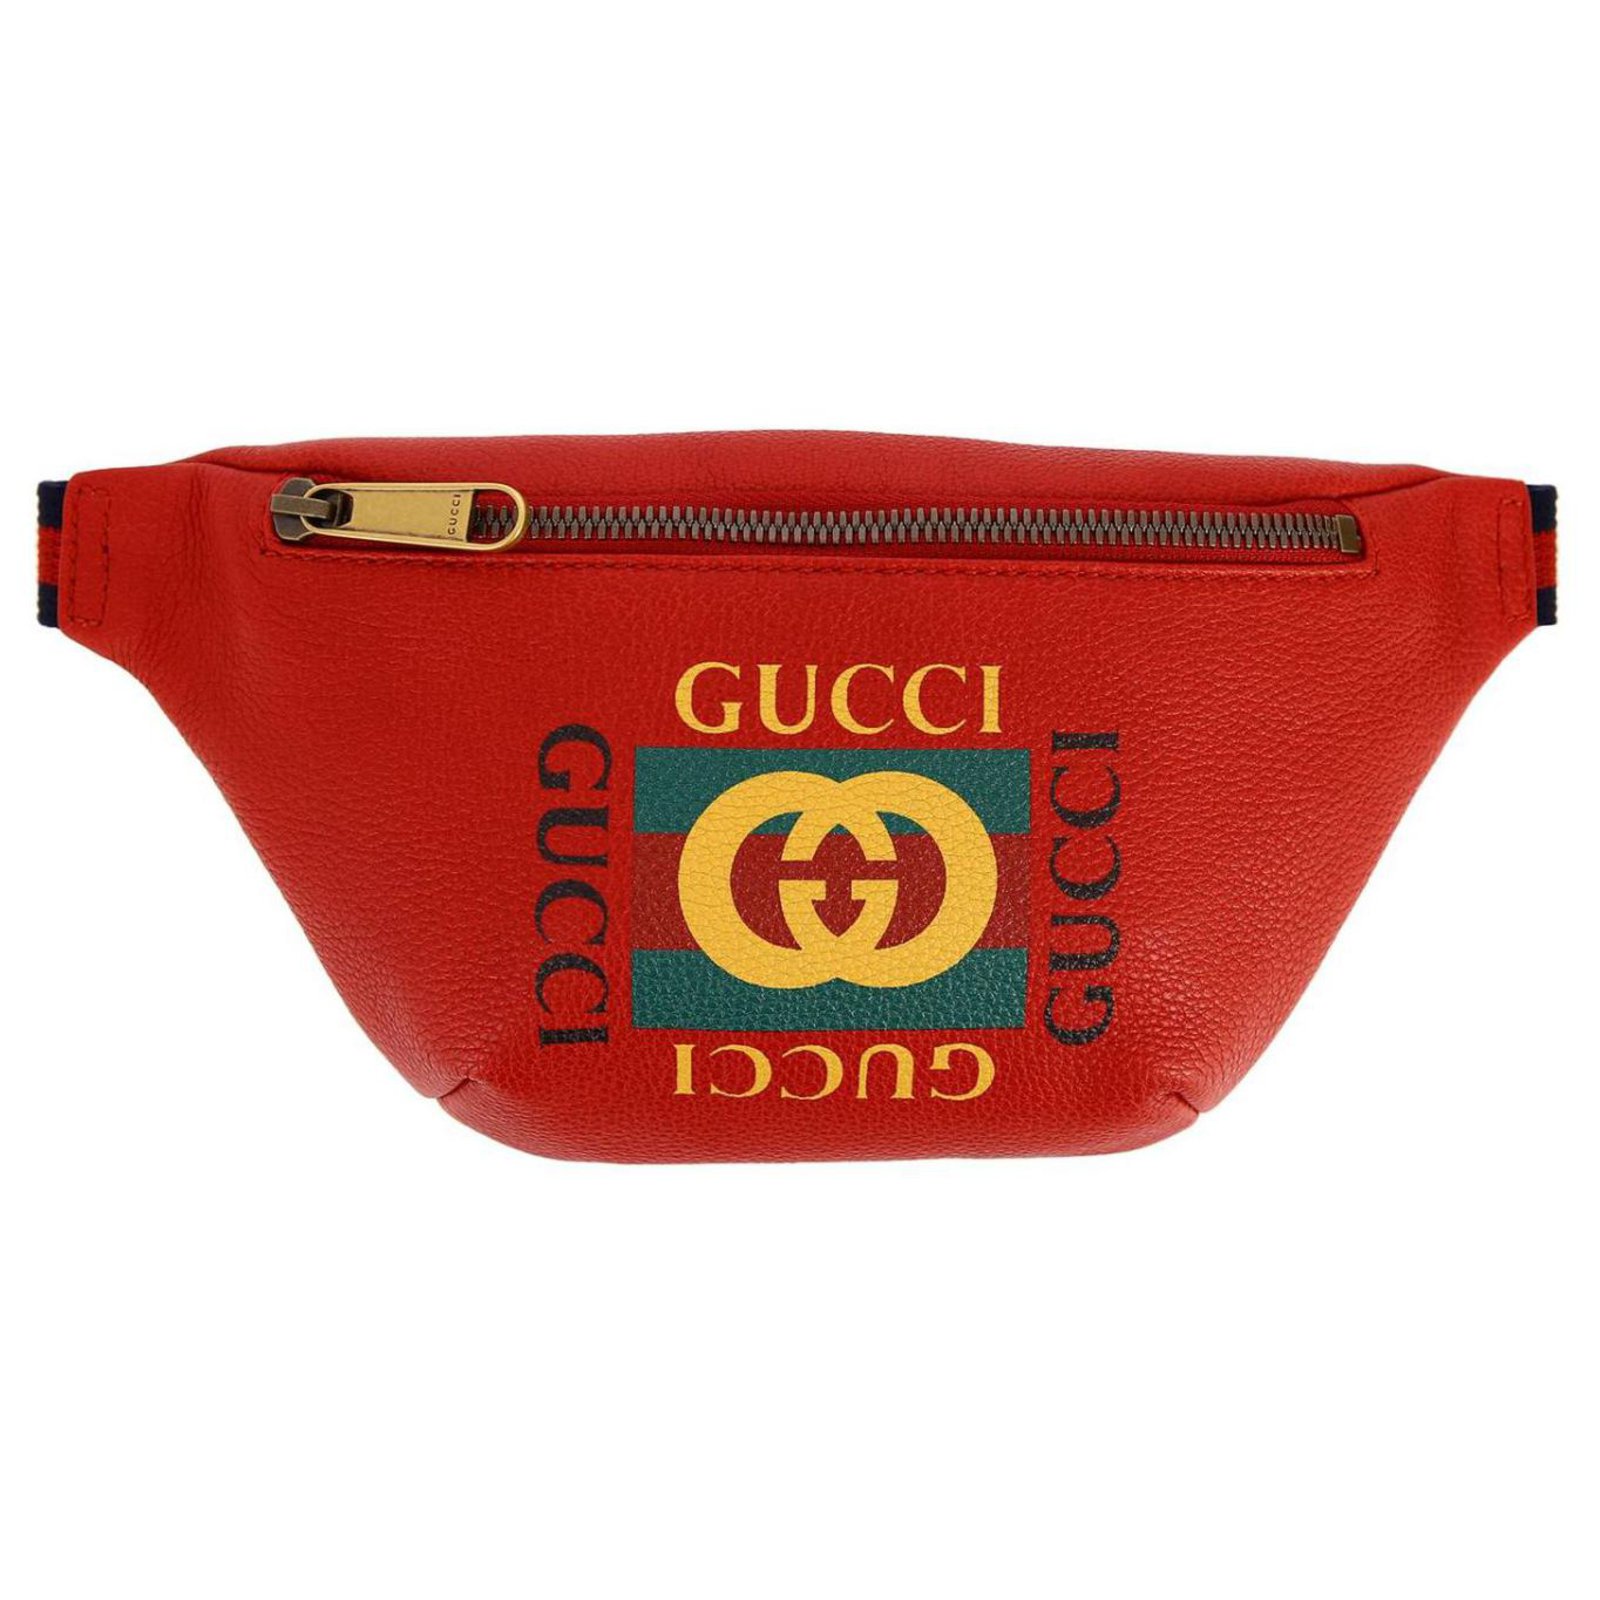 gucci red belt bag